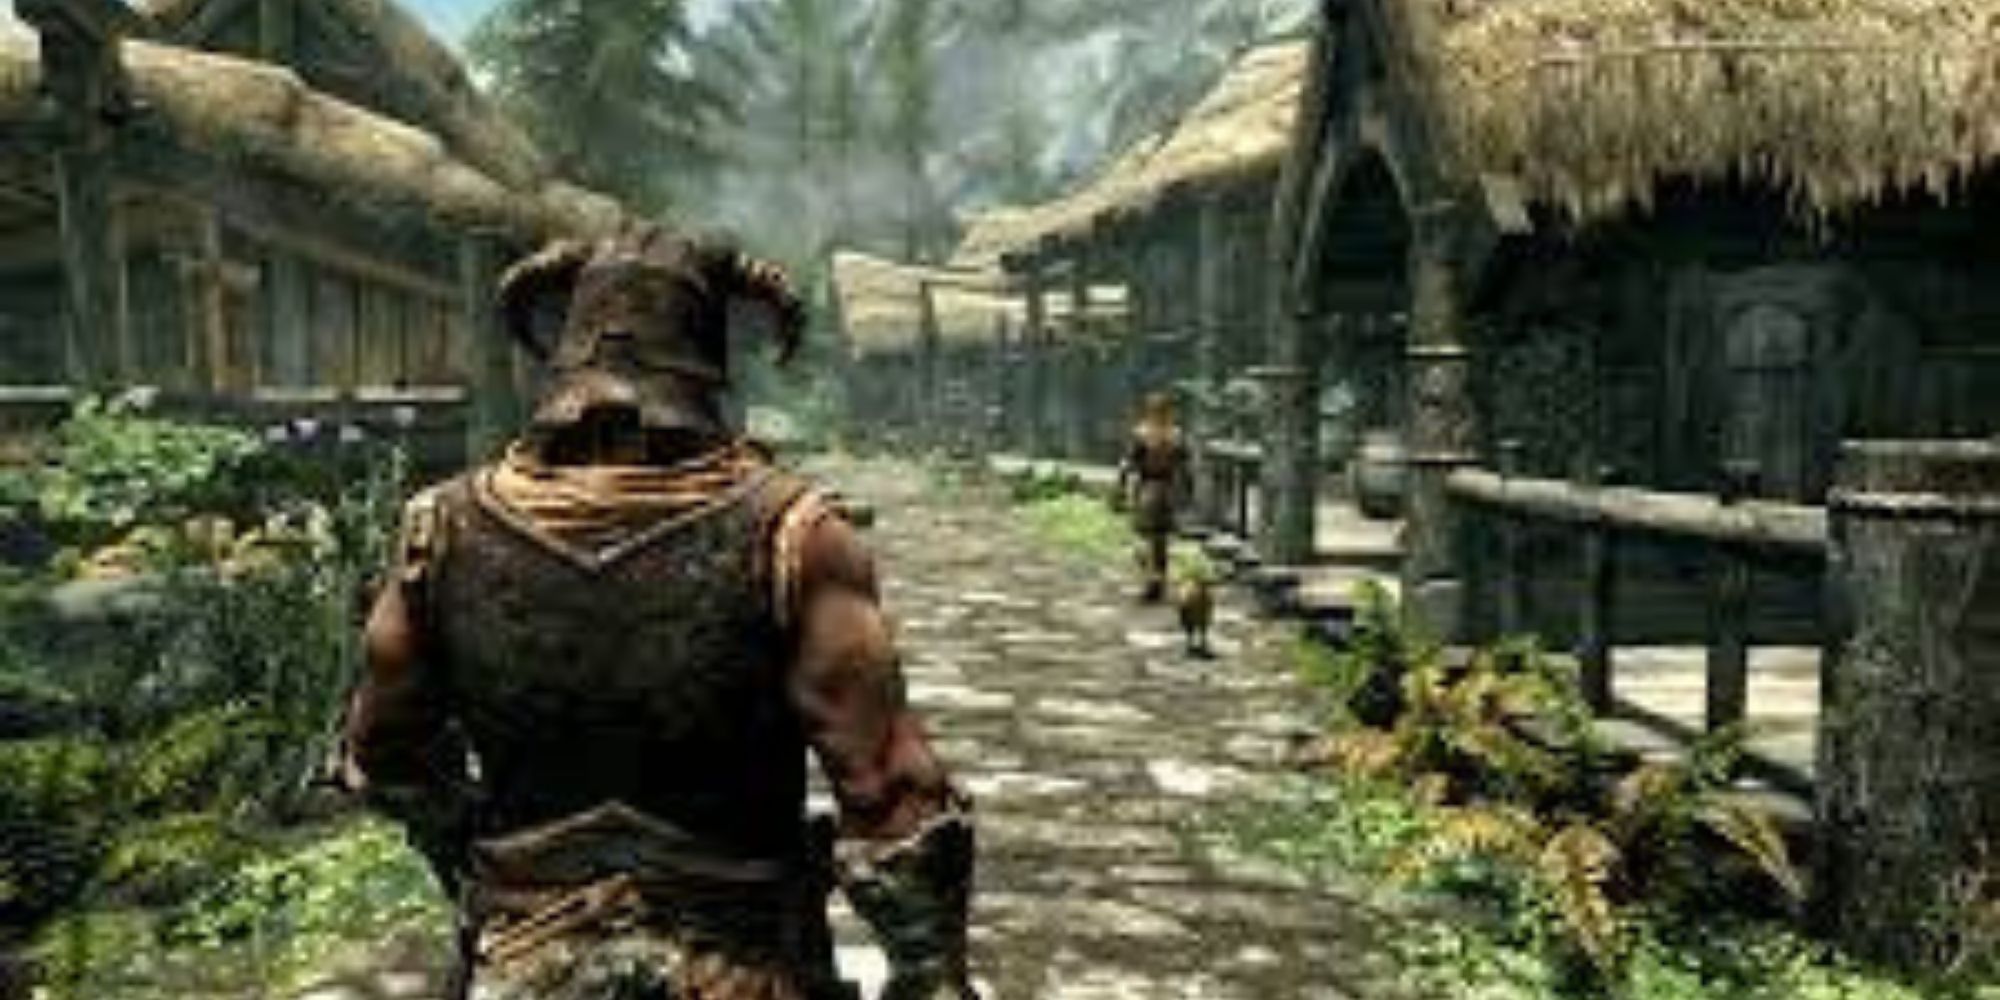 Dovahkiin walkingn in a village in The Elder Scrolls V Skyrim